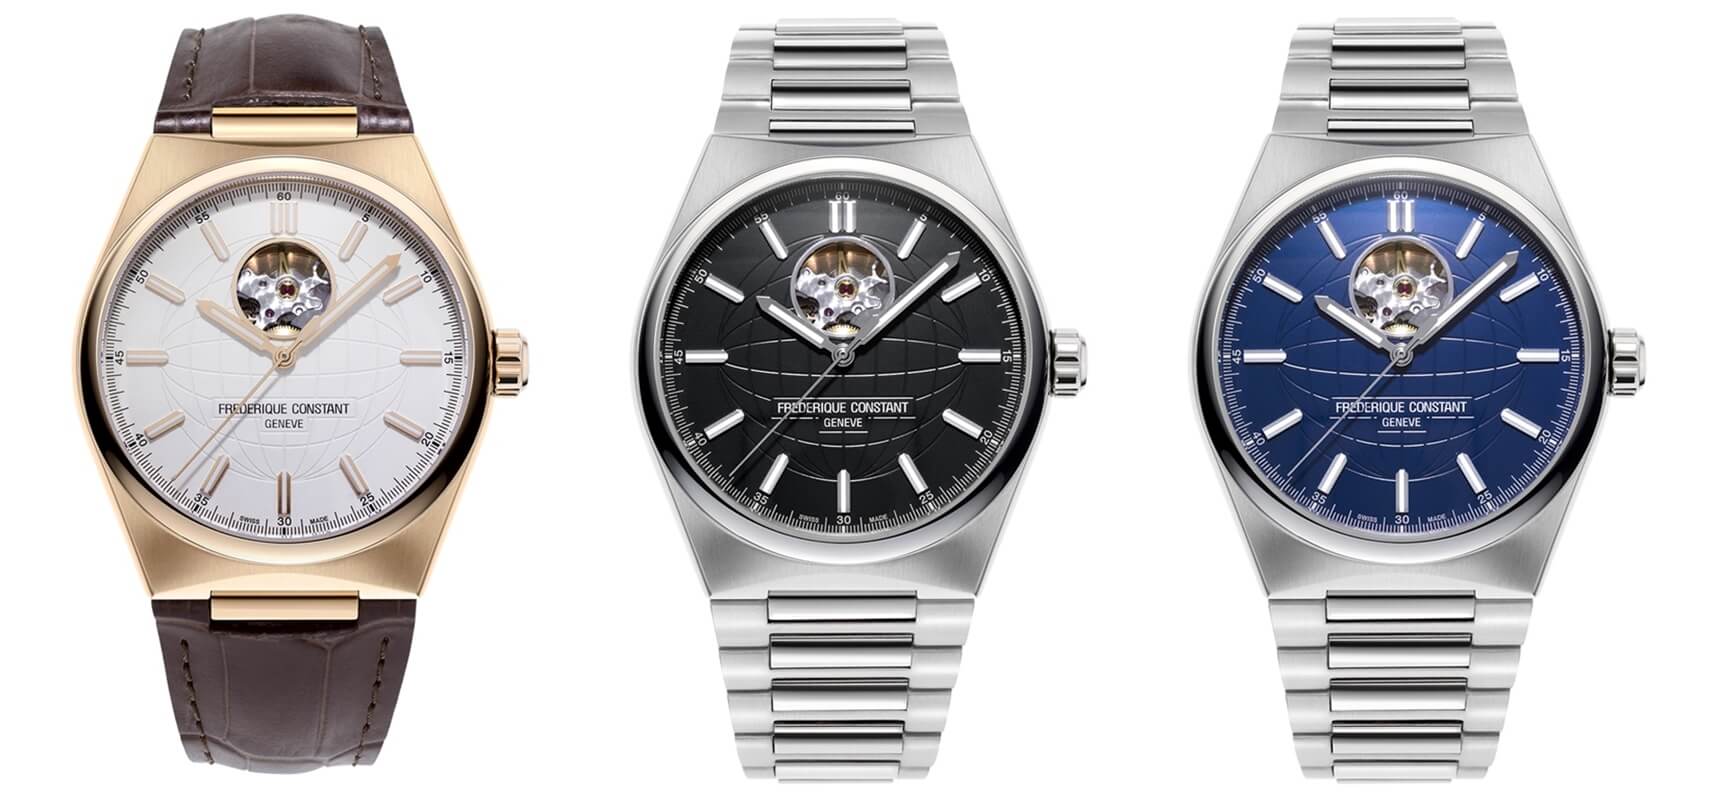 FREDERIQUE CONSTANT Highlife - reaktywacja kultowej serii zegarków